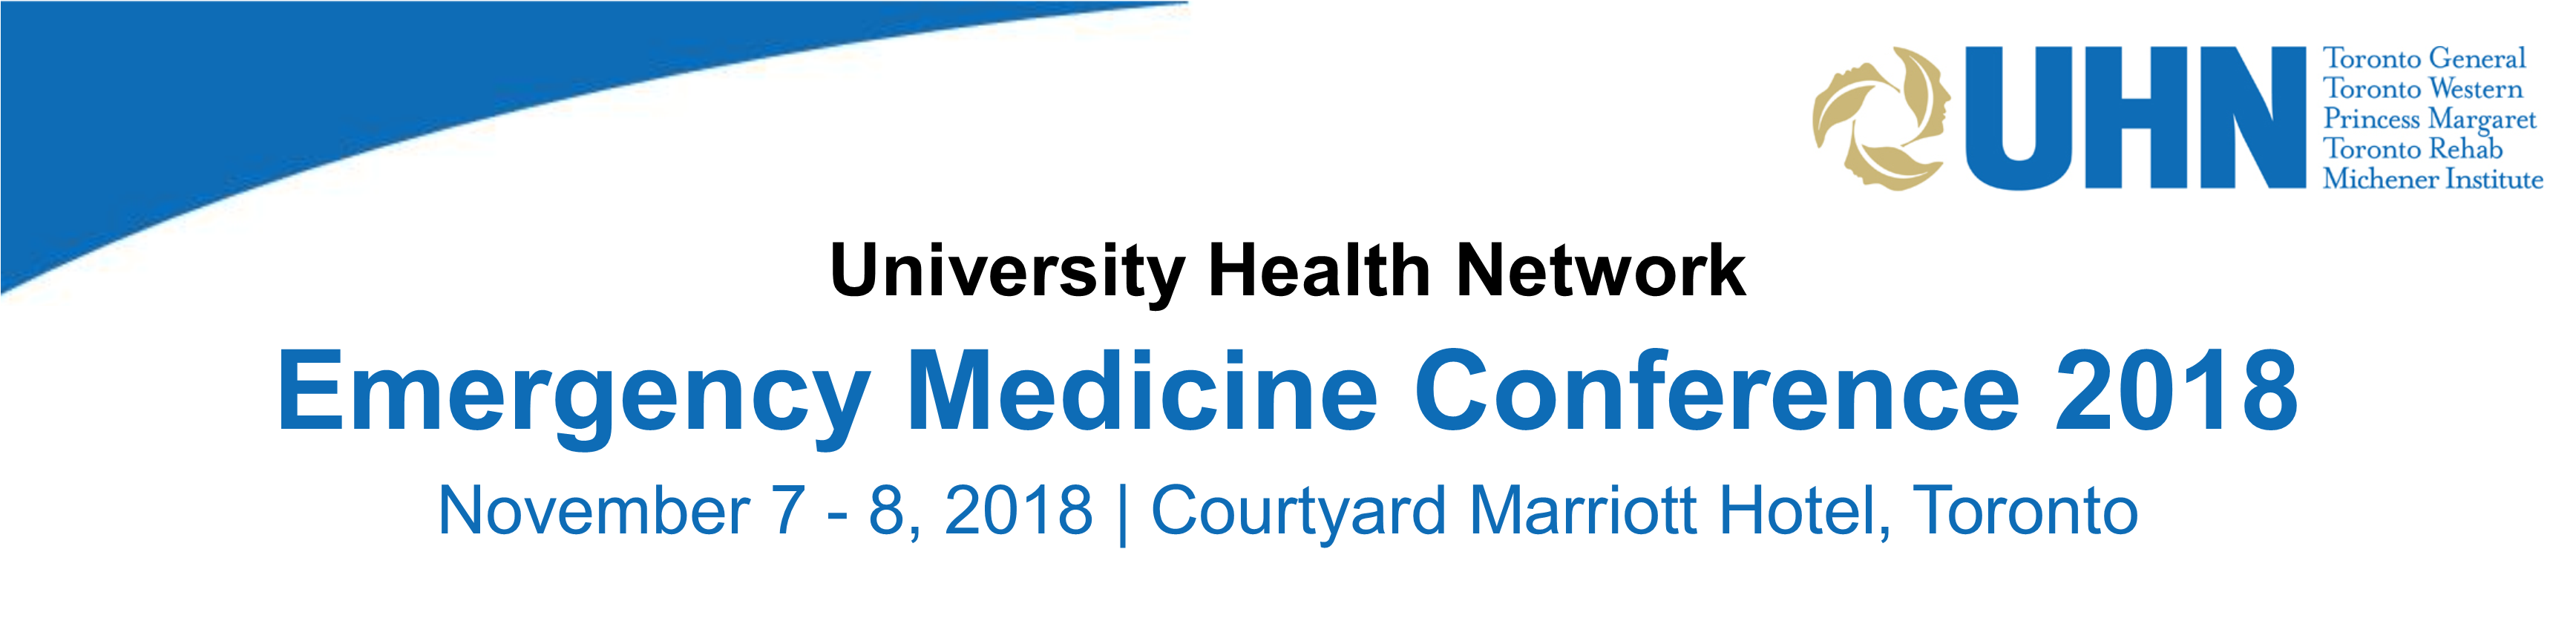 University Health Network 2018 Emergency Medicine Conference